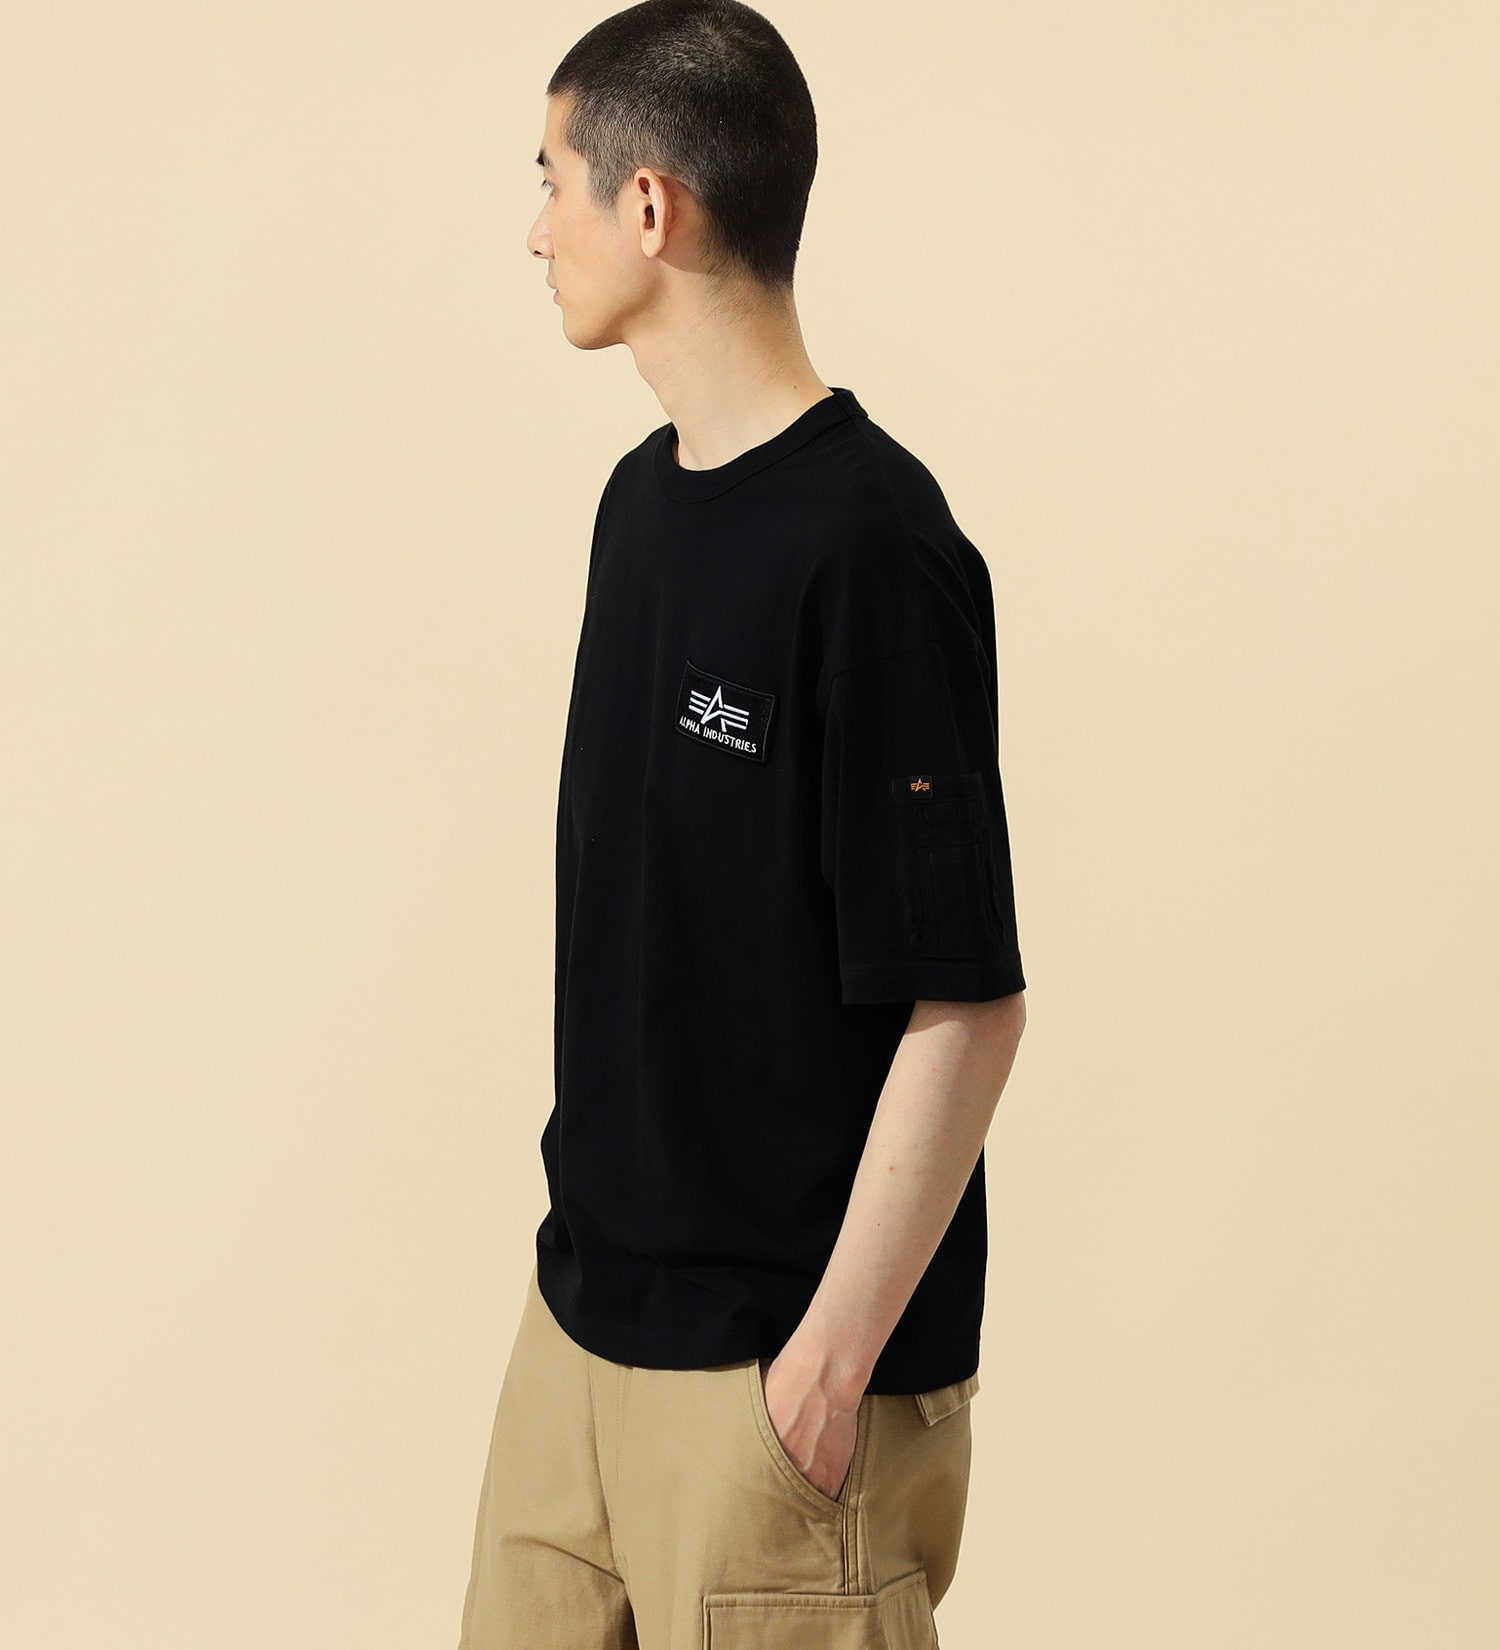 ALPHA(アルファ)のスクアドロンプリントパッチTシャツ 半袖|トップス/Tシャツ/カットソー/メンズ|ブラック